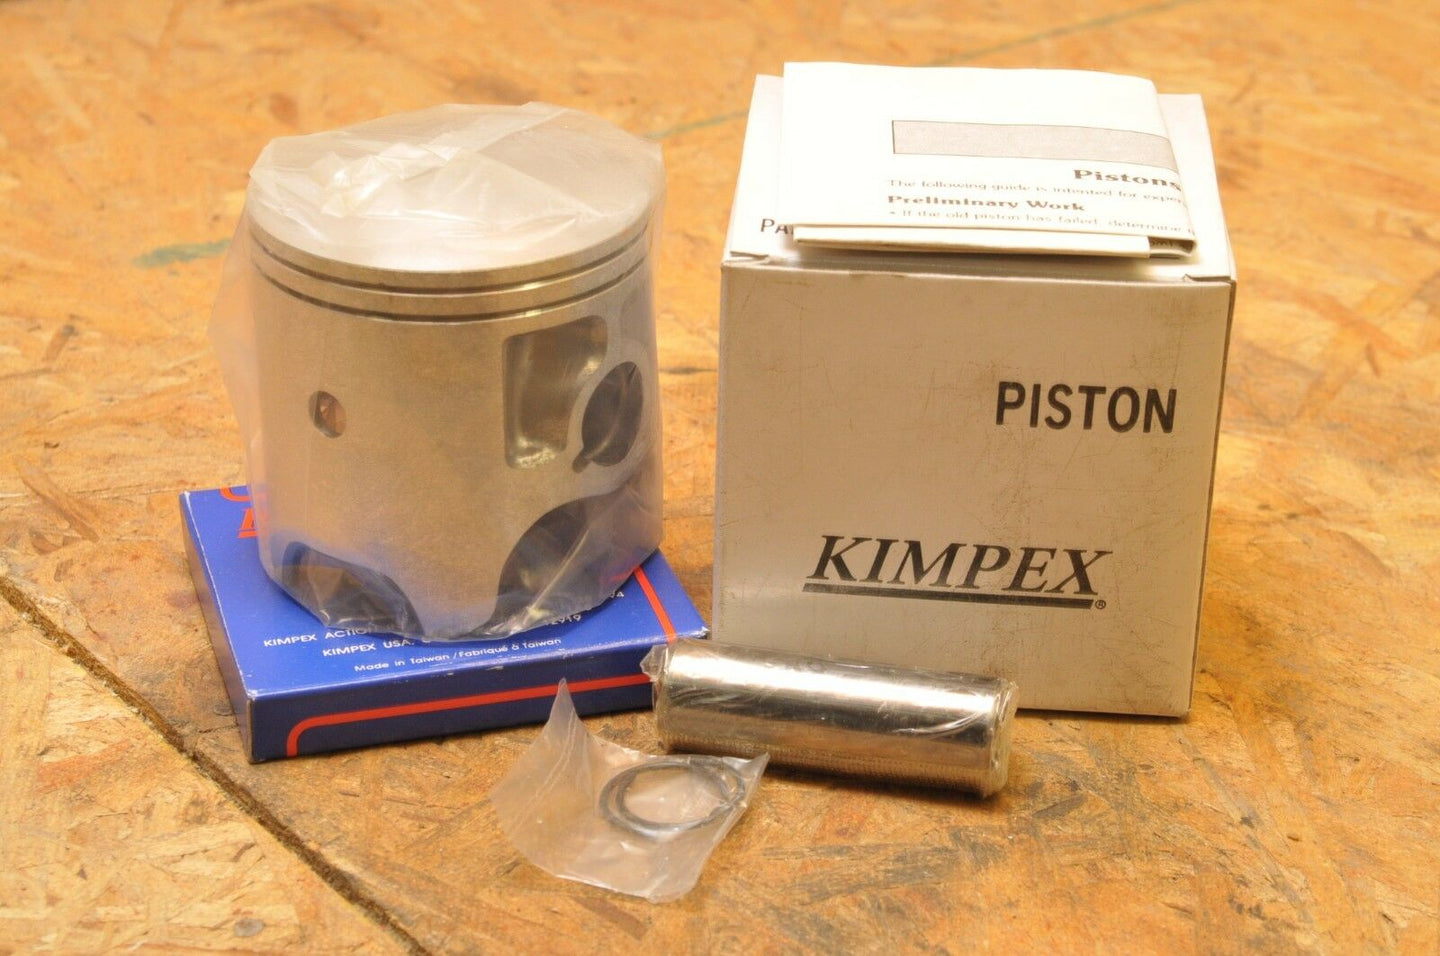 NEW NOS KIMPEX PISTON KIT 09-828 YAMAHA 700 V-MAX MOUNTAIN SX VENTURE 1997-2003